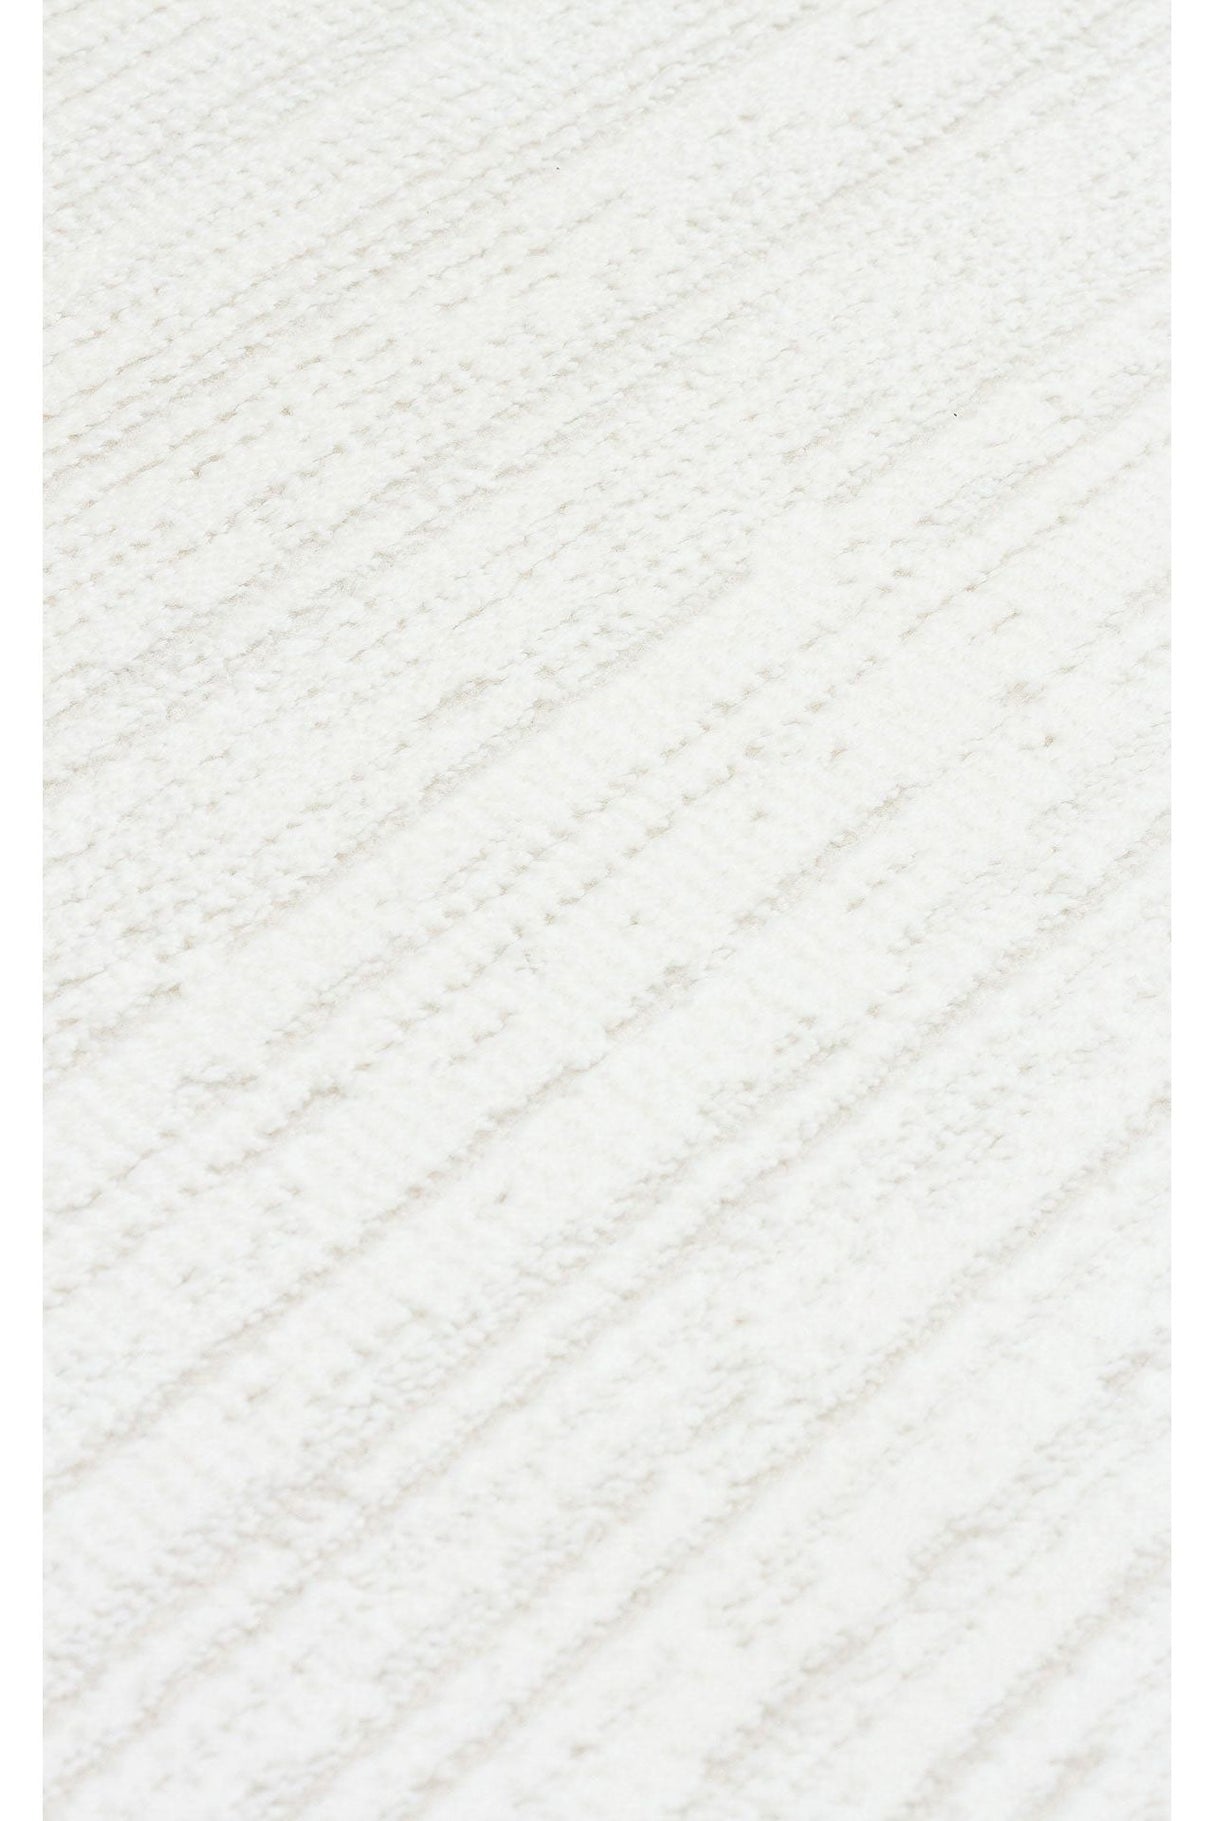 #Turkish_Carpets_Rugs# #Modern_Carpets# #Abrash_Carpets#Lgs 16 Cream Grey Xw